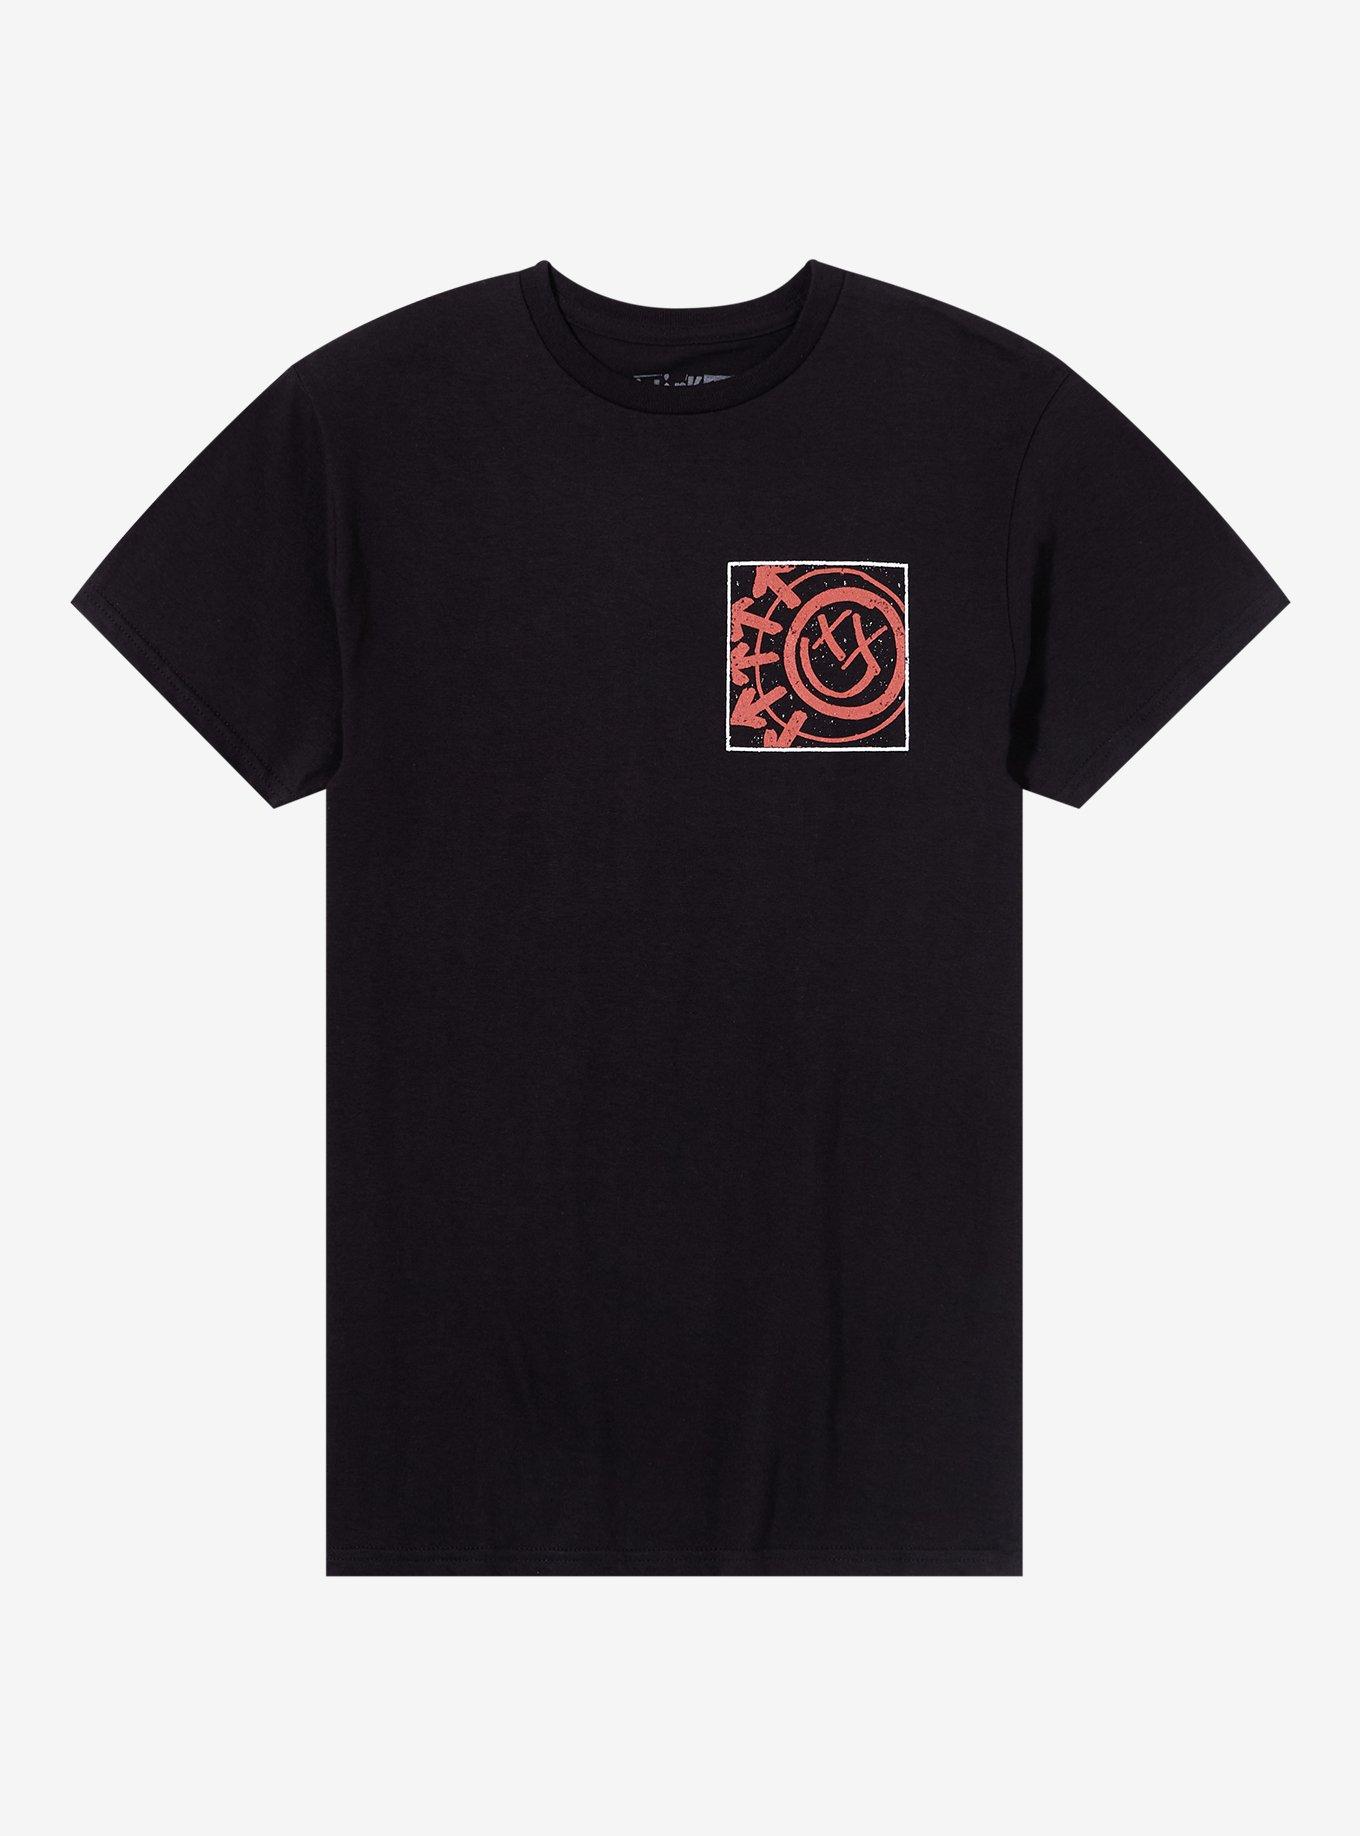 Blink-182 Two-Sided Logo Boyfriend Fit Girls T-Shirt